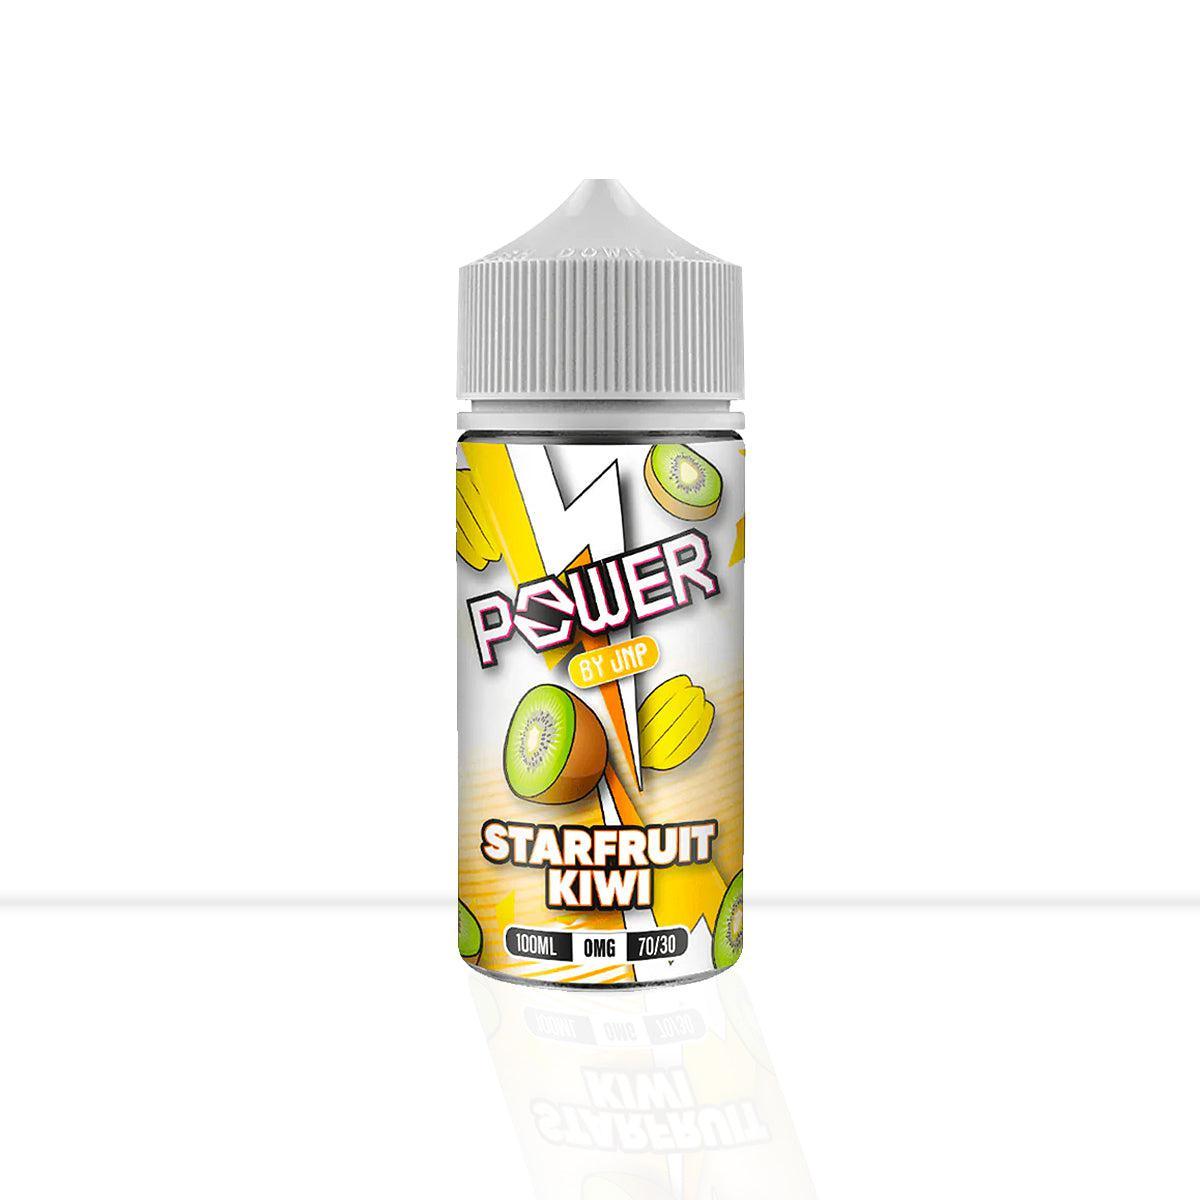 Starfruit Kiwi Shortfill Juice N Power